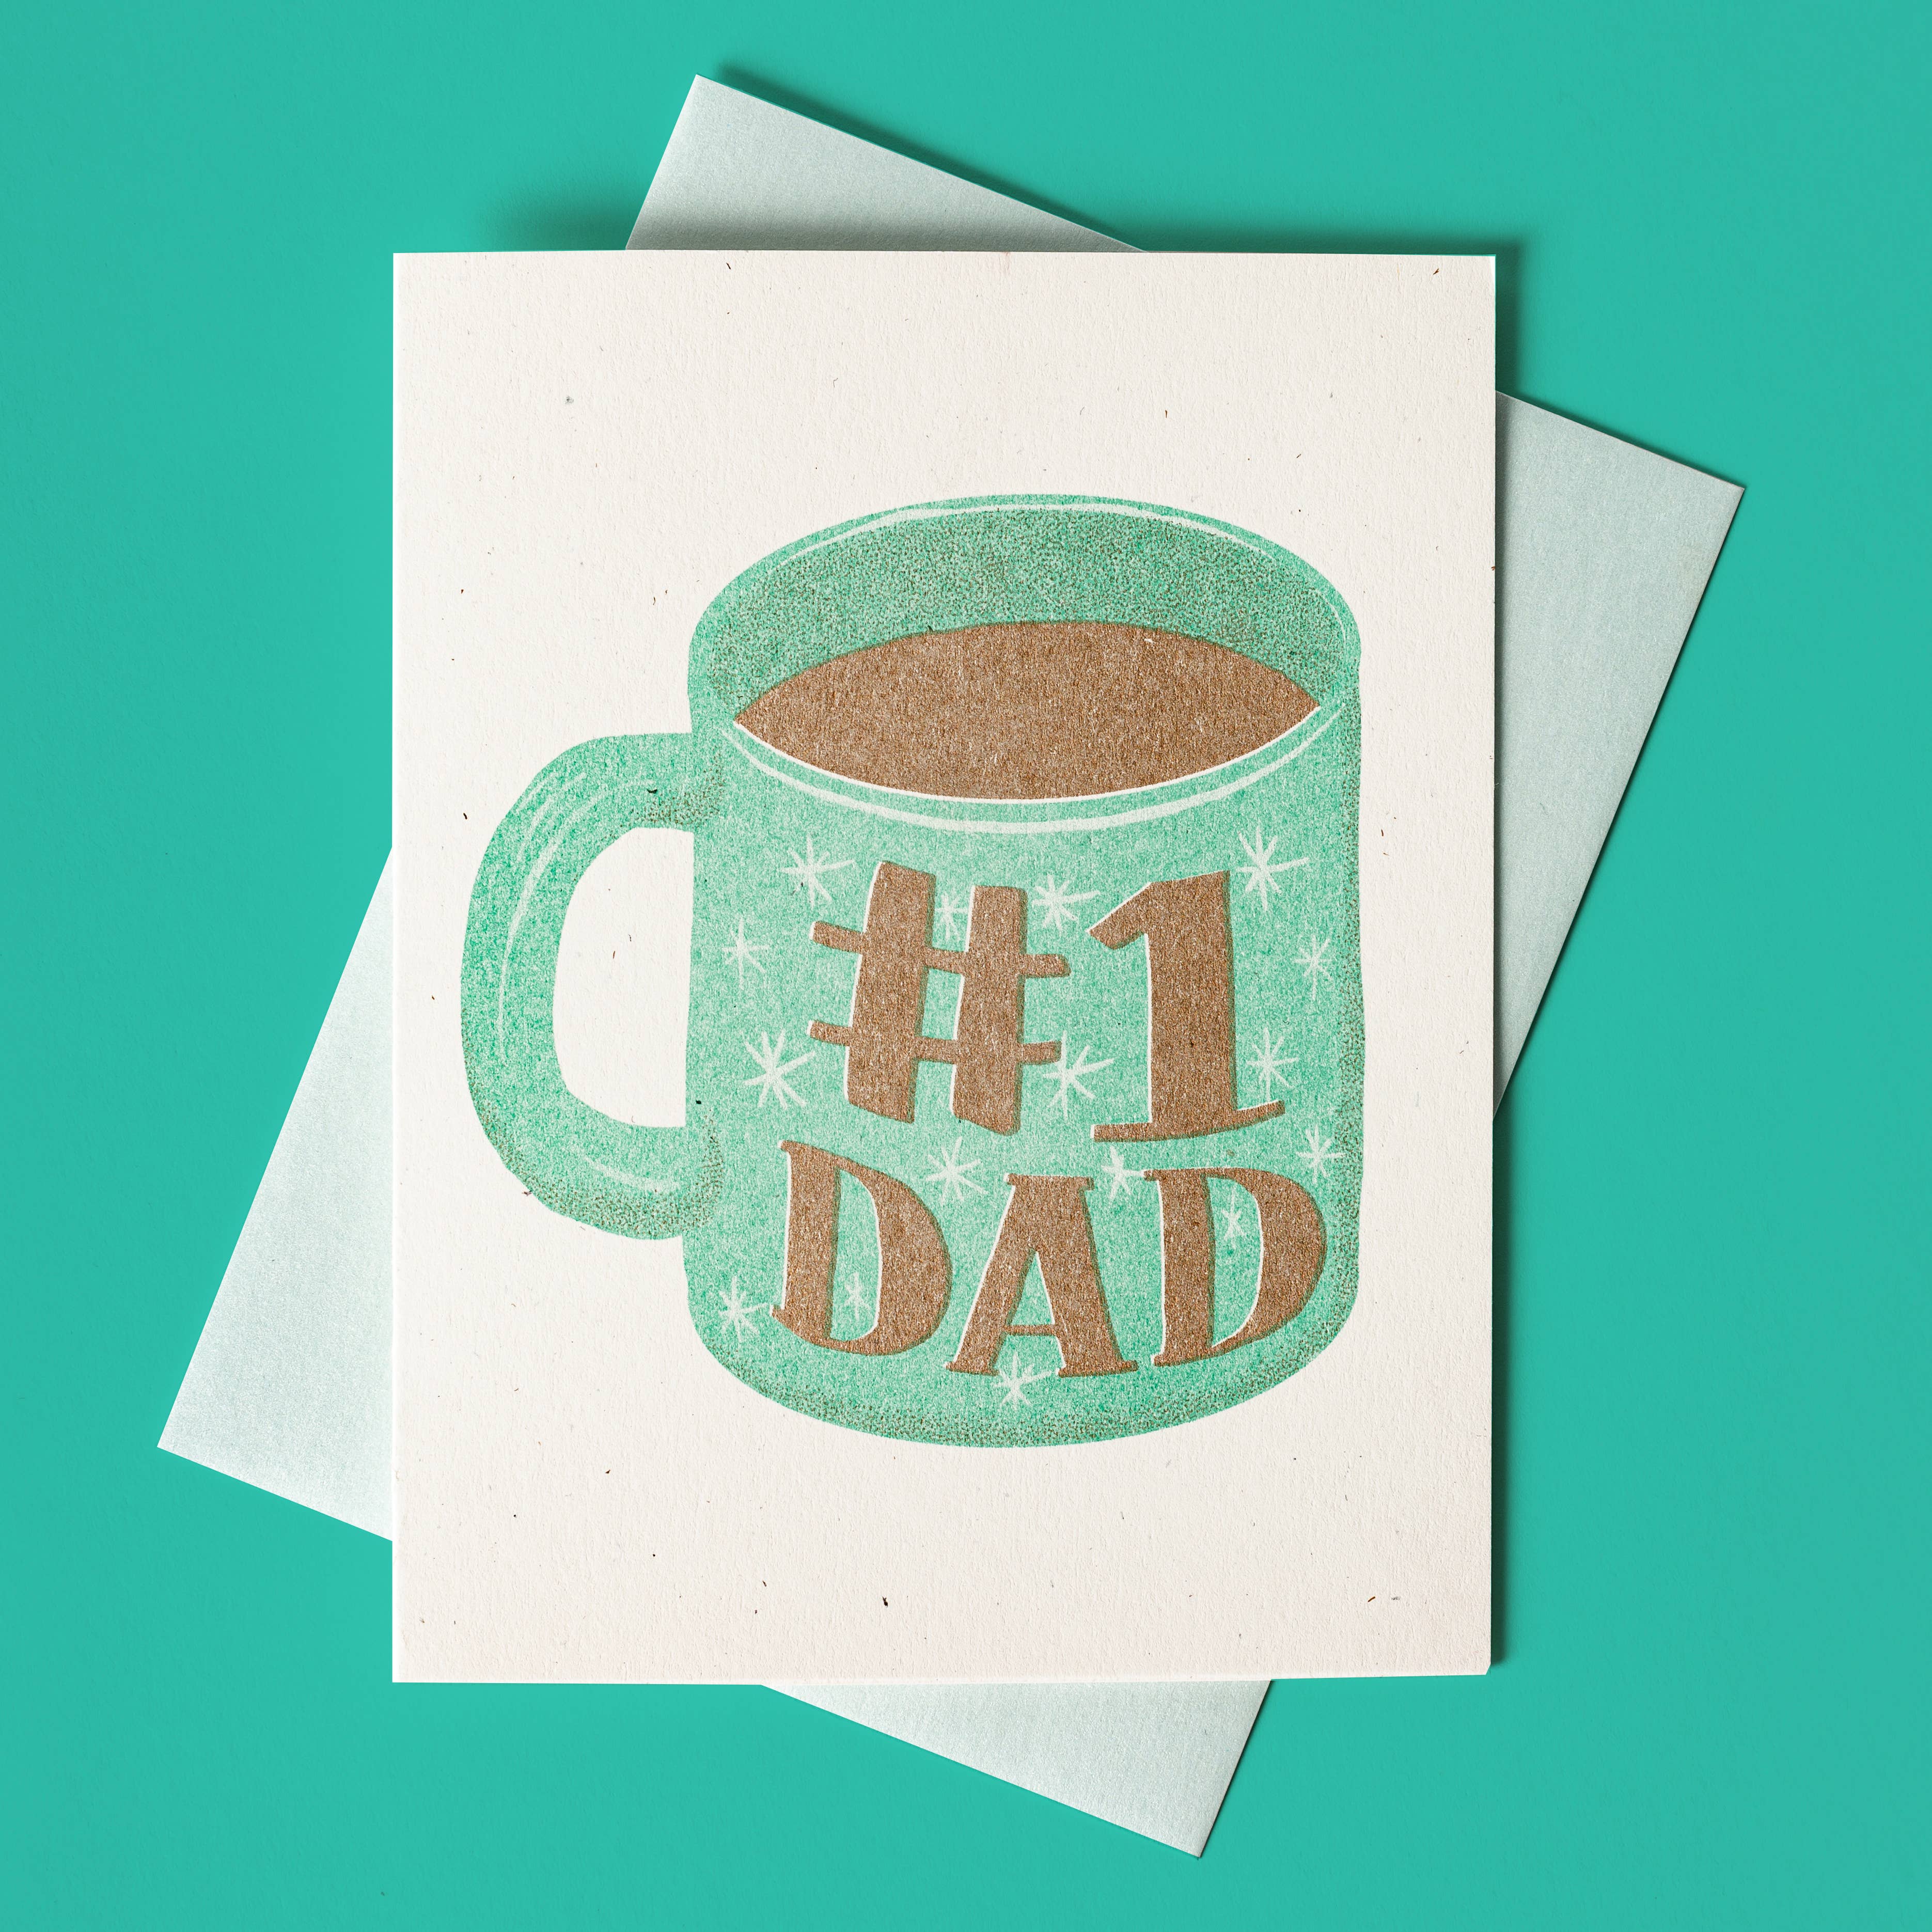 #1 Dad Mug Card